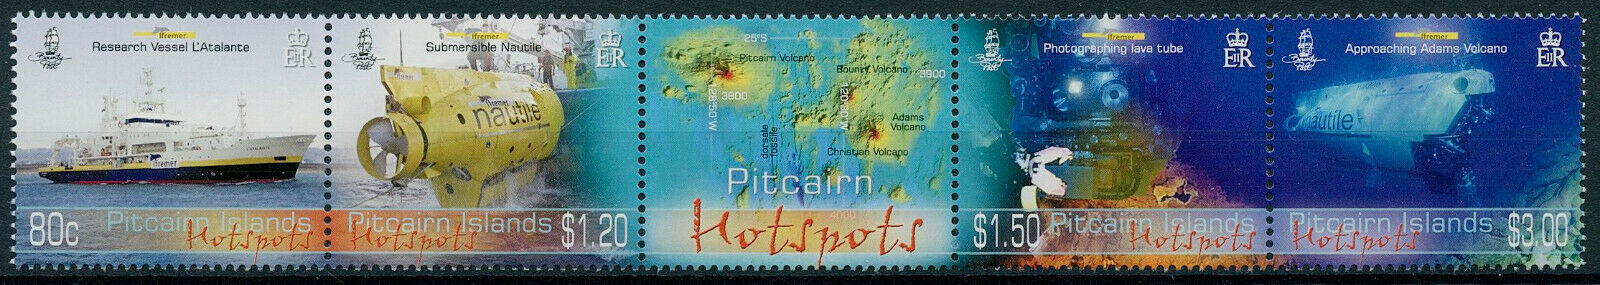 Pitcairn Islands 2010 MNH Ships Stamps Hotspots Submarine Volcanoes 4v Strip